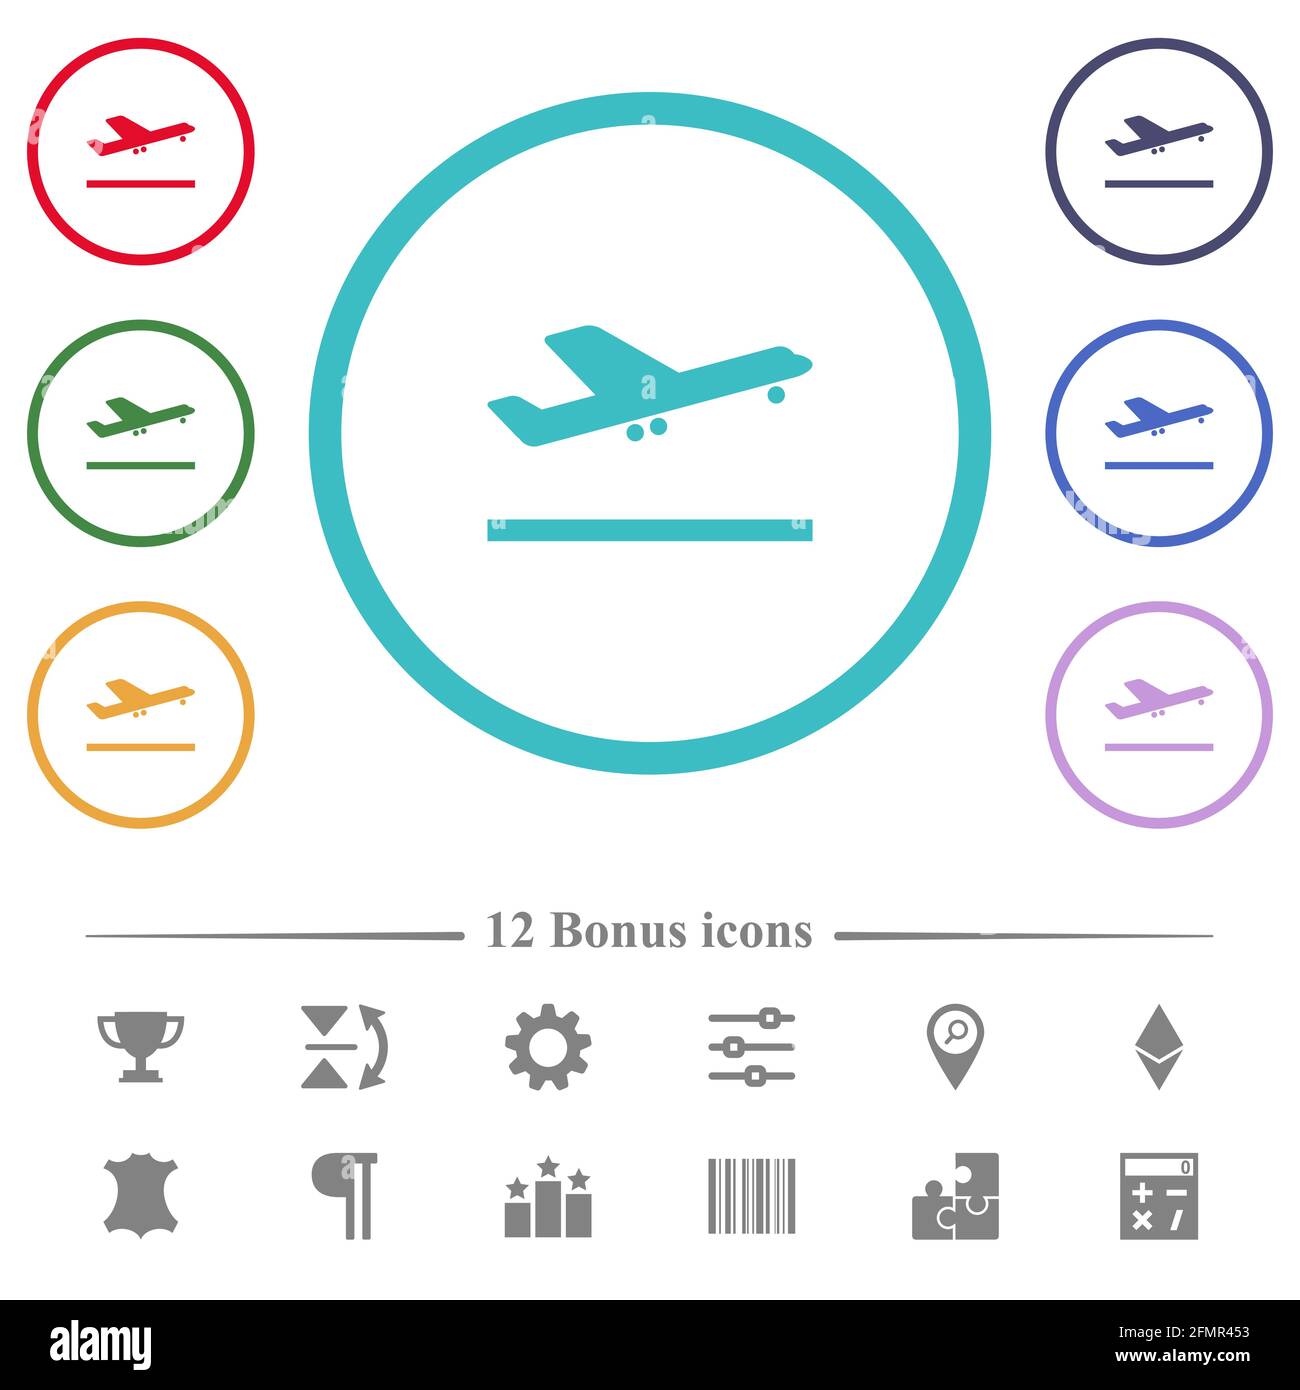 Flugzeug heben flache Farbsymbole in kreisförmigen Umrissen ab. 12 Bonus-Symbole enthalten. Stock Vektor